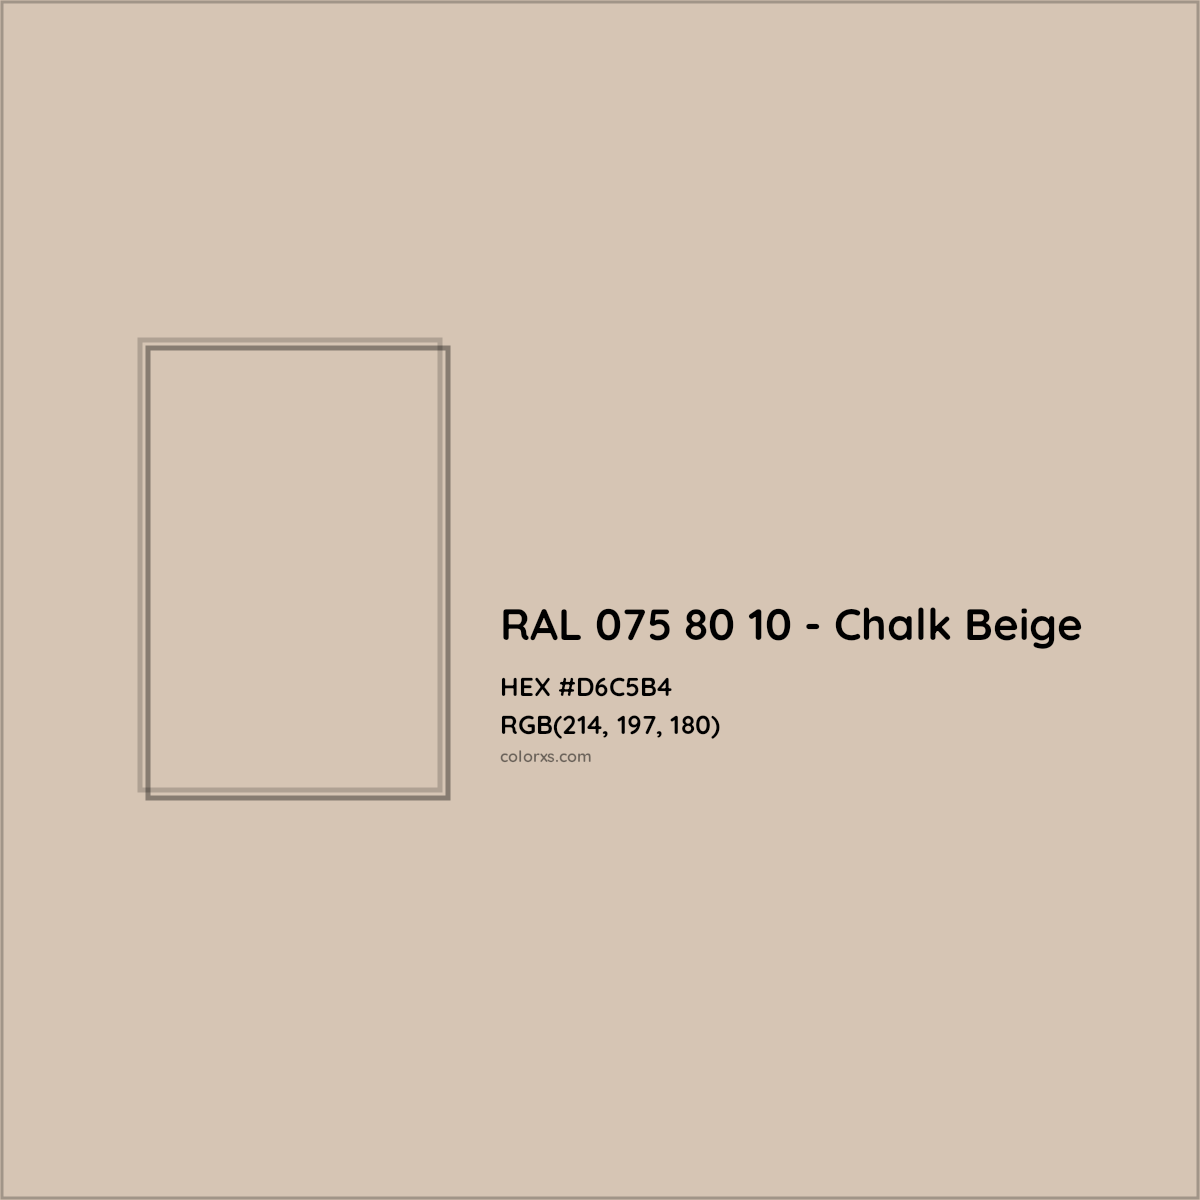 HEX #D6C5B4 RAL 075 80 10 - Chalk Beige CMS RAL Design - Color Code